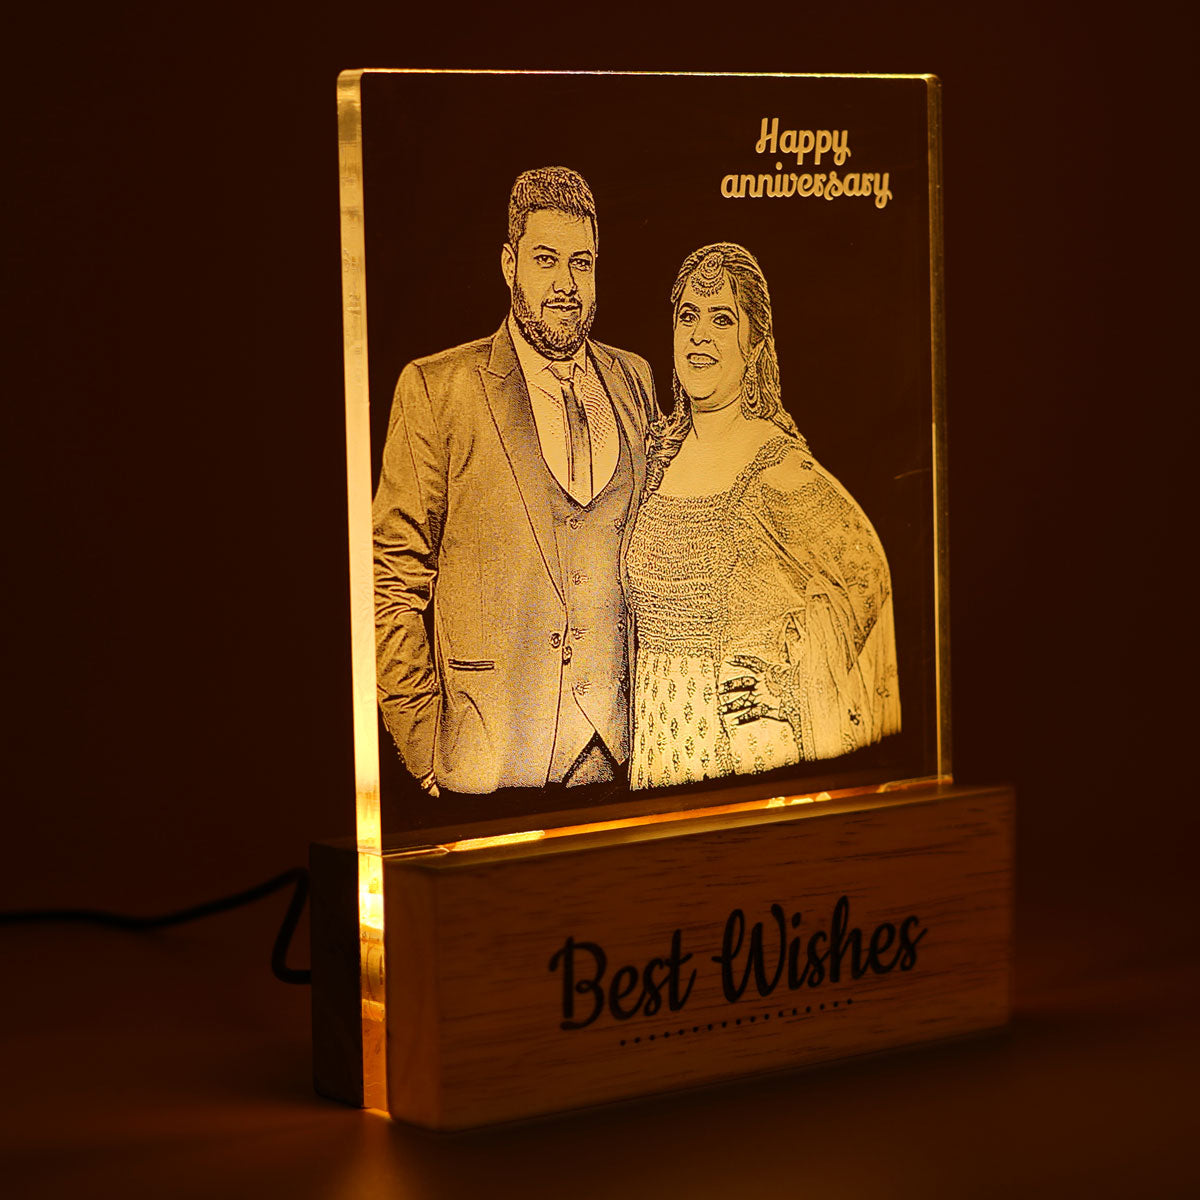 Couple Photo Engraved Night Lamp Gift